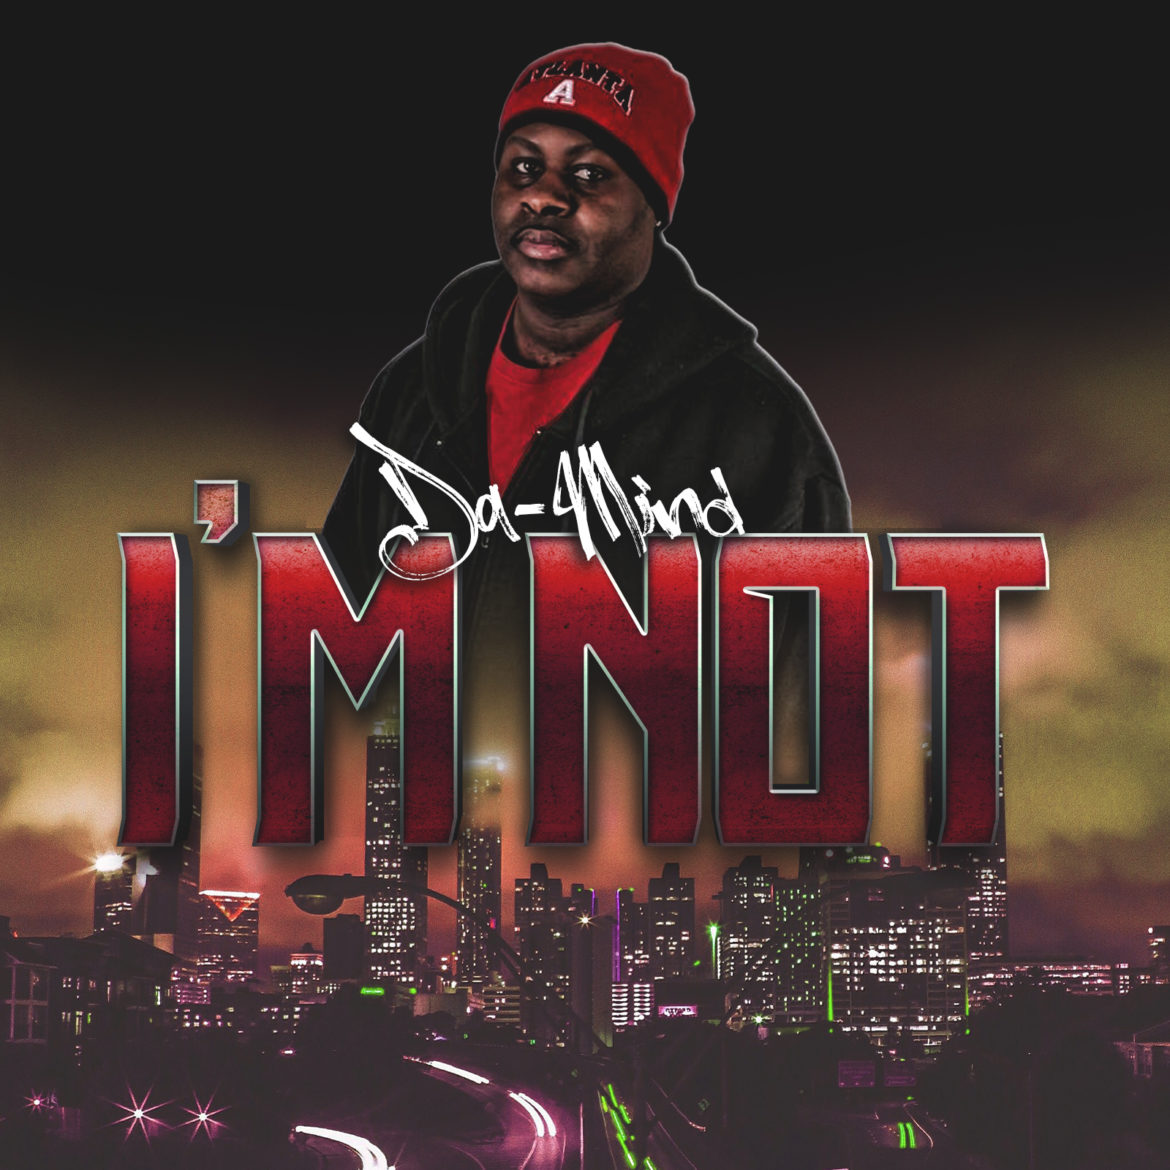 Da-Mind Announces New Single ‘I’m Not’